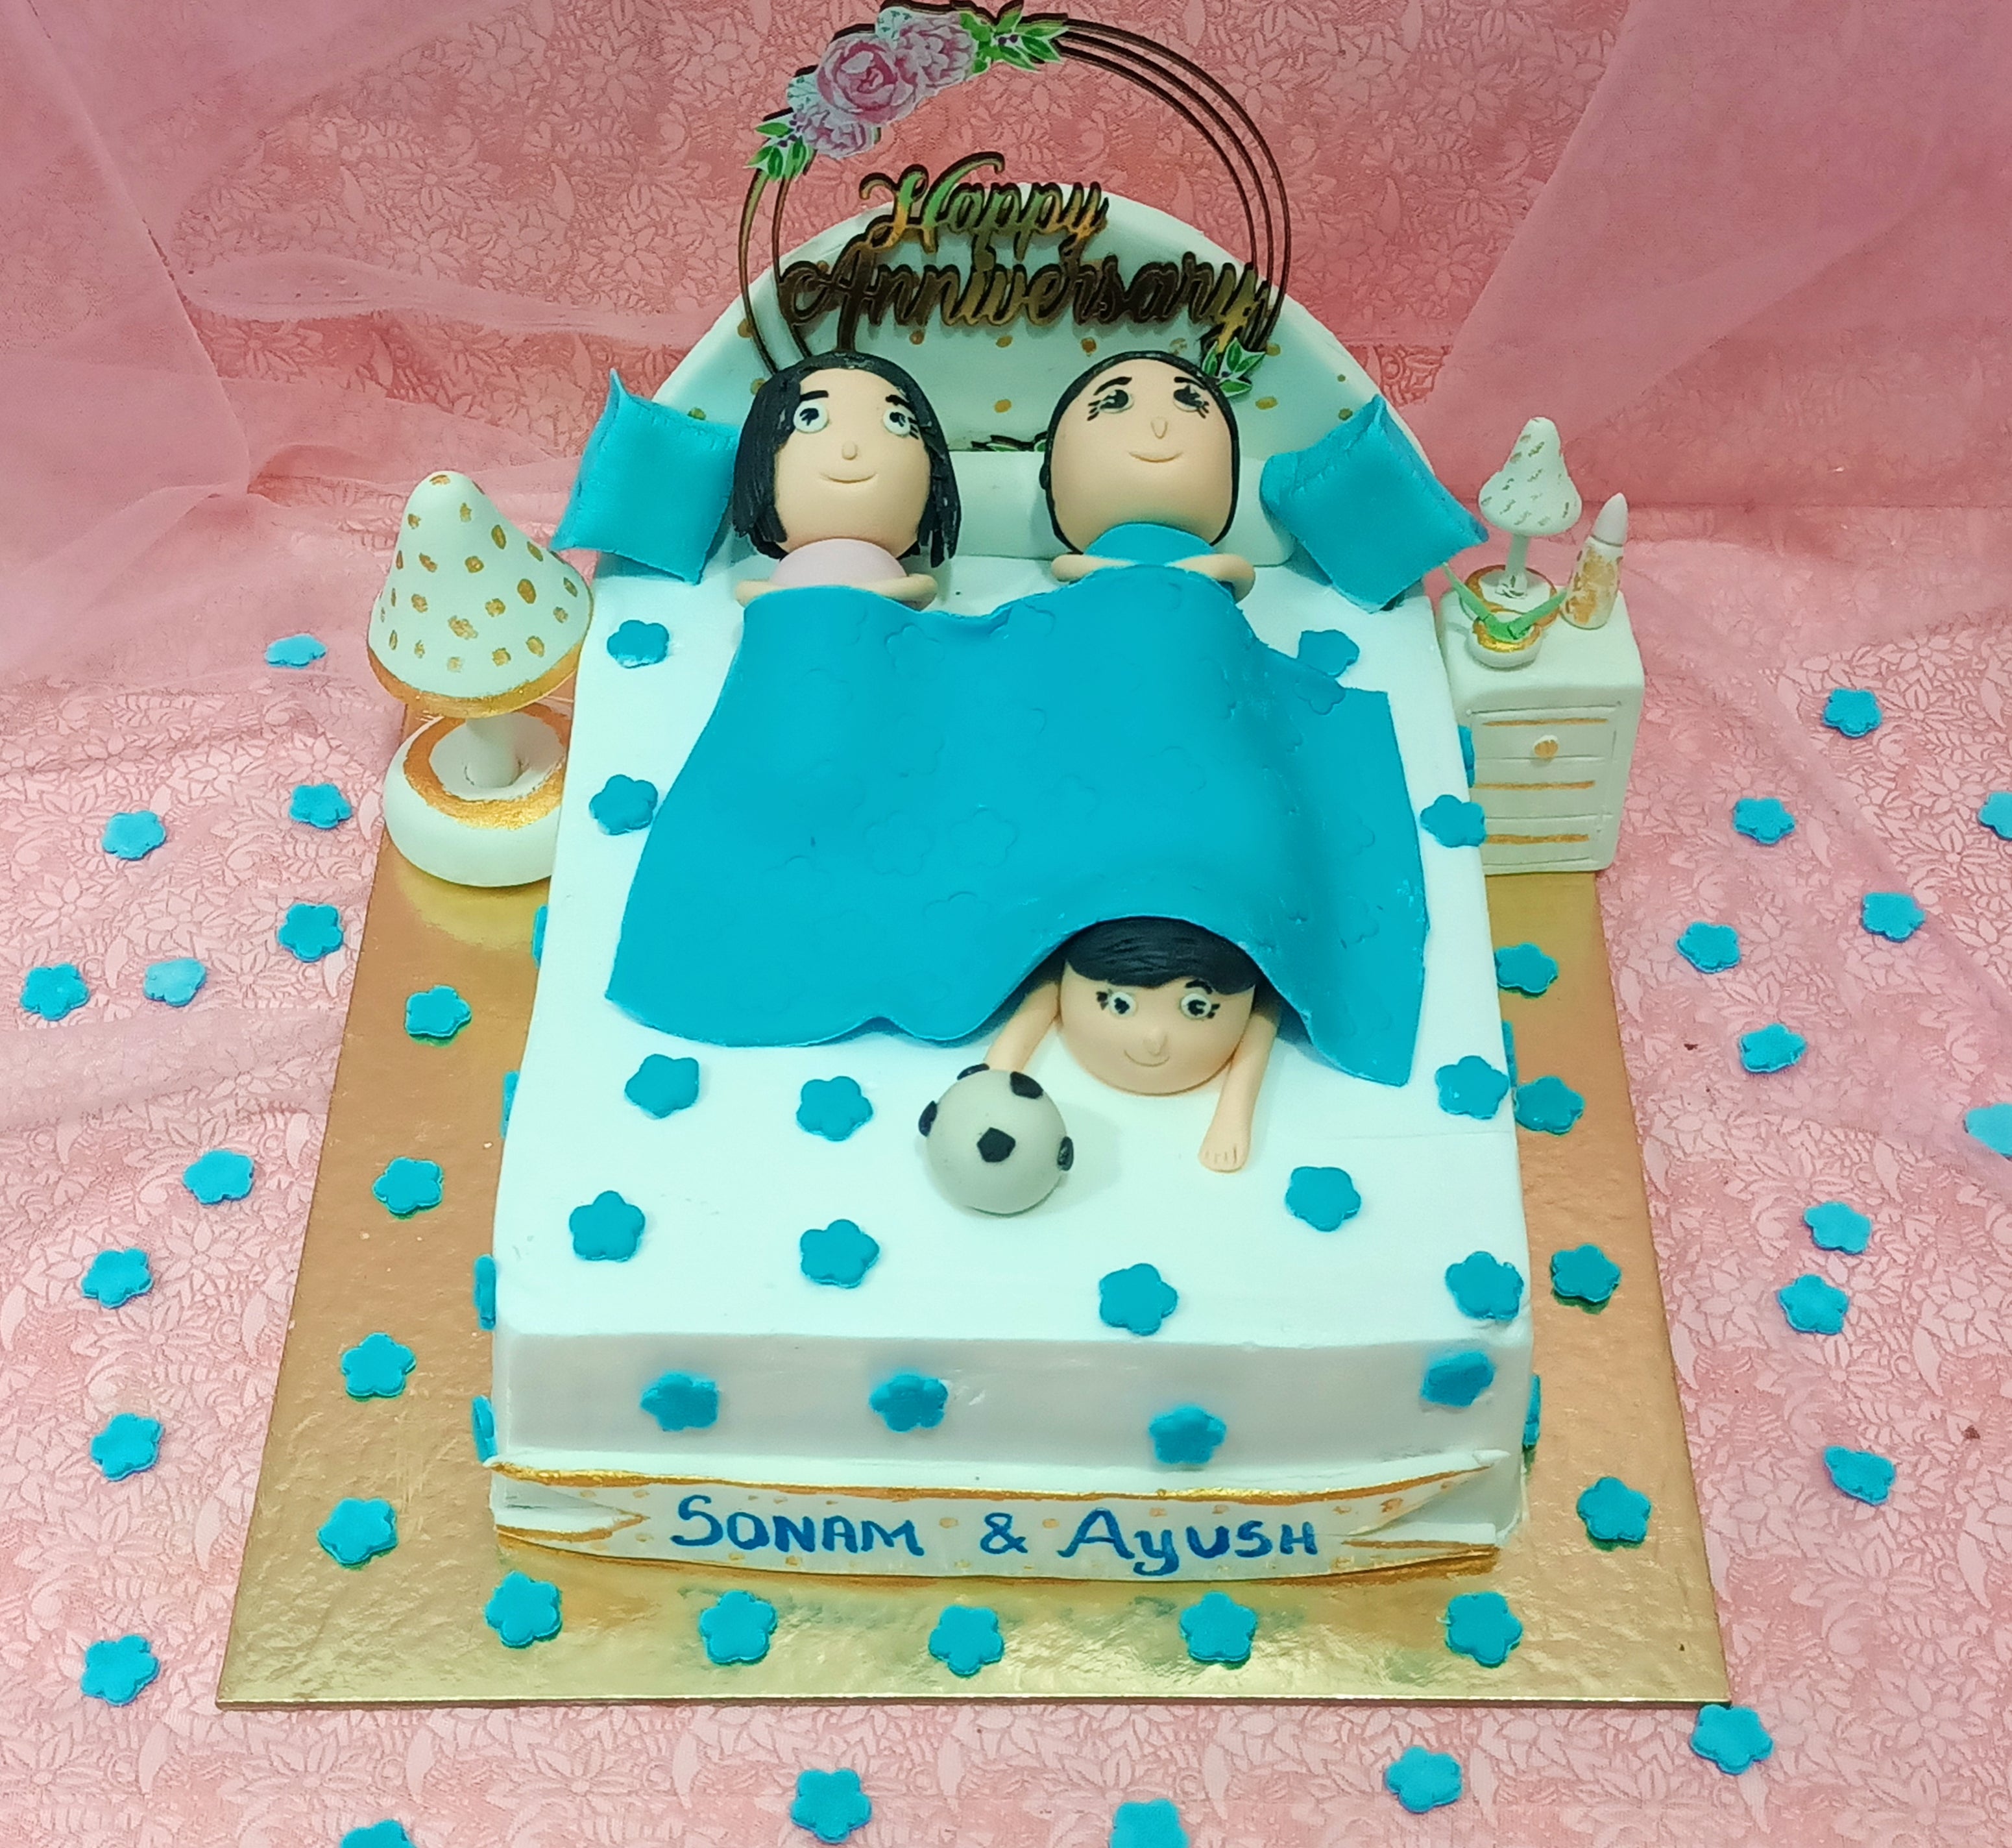 Take A Look At Bhumi Pednekars Cake-Licious Birthday Wish For Sonam Kapoor  - NDTV Food